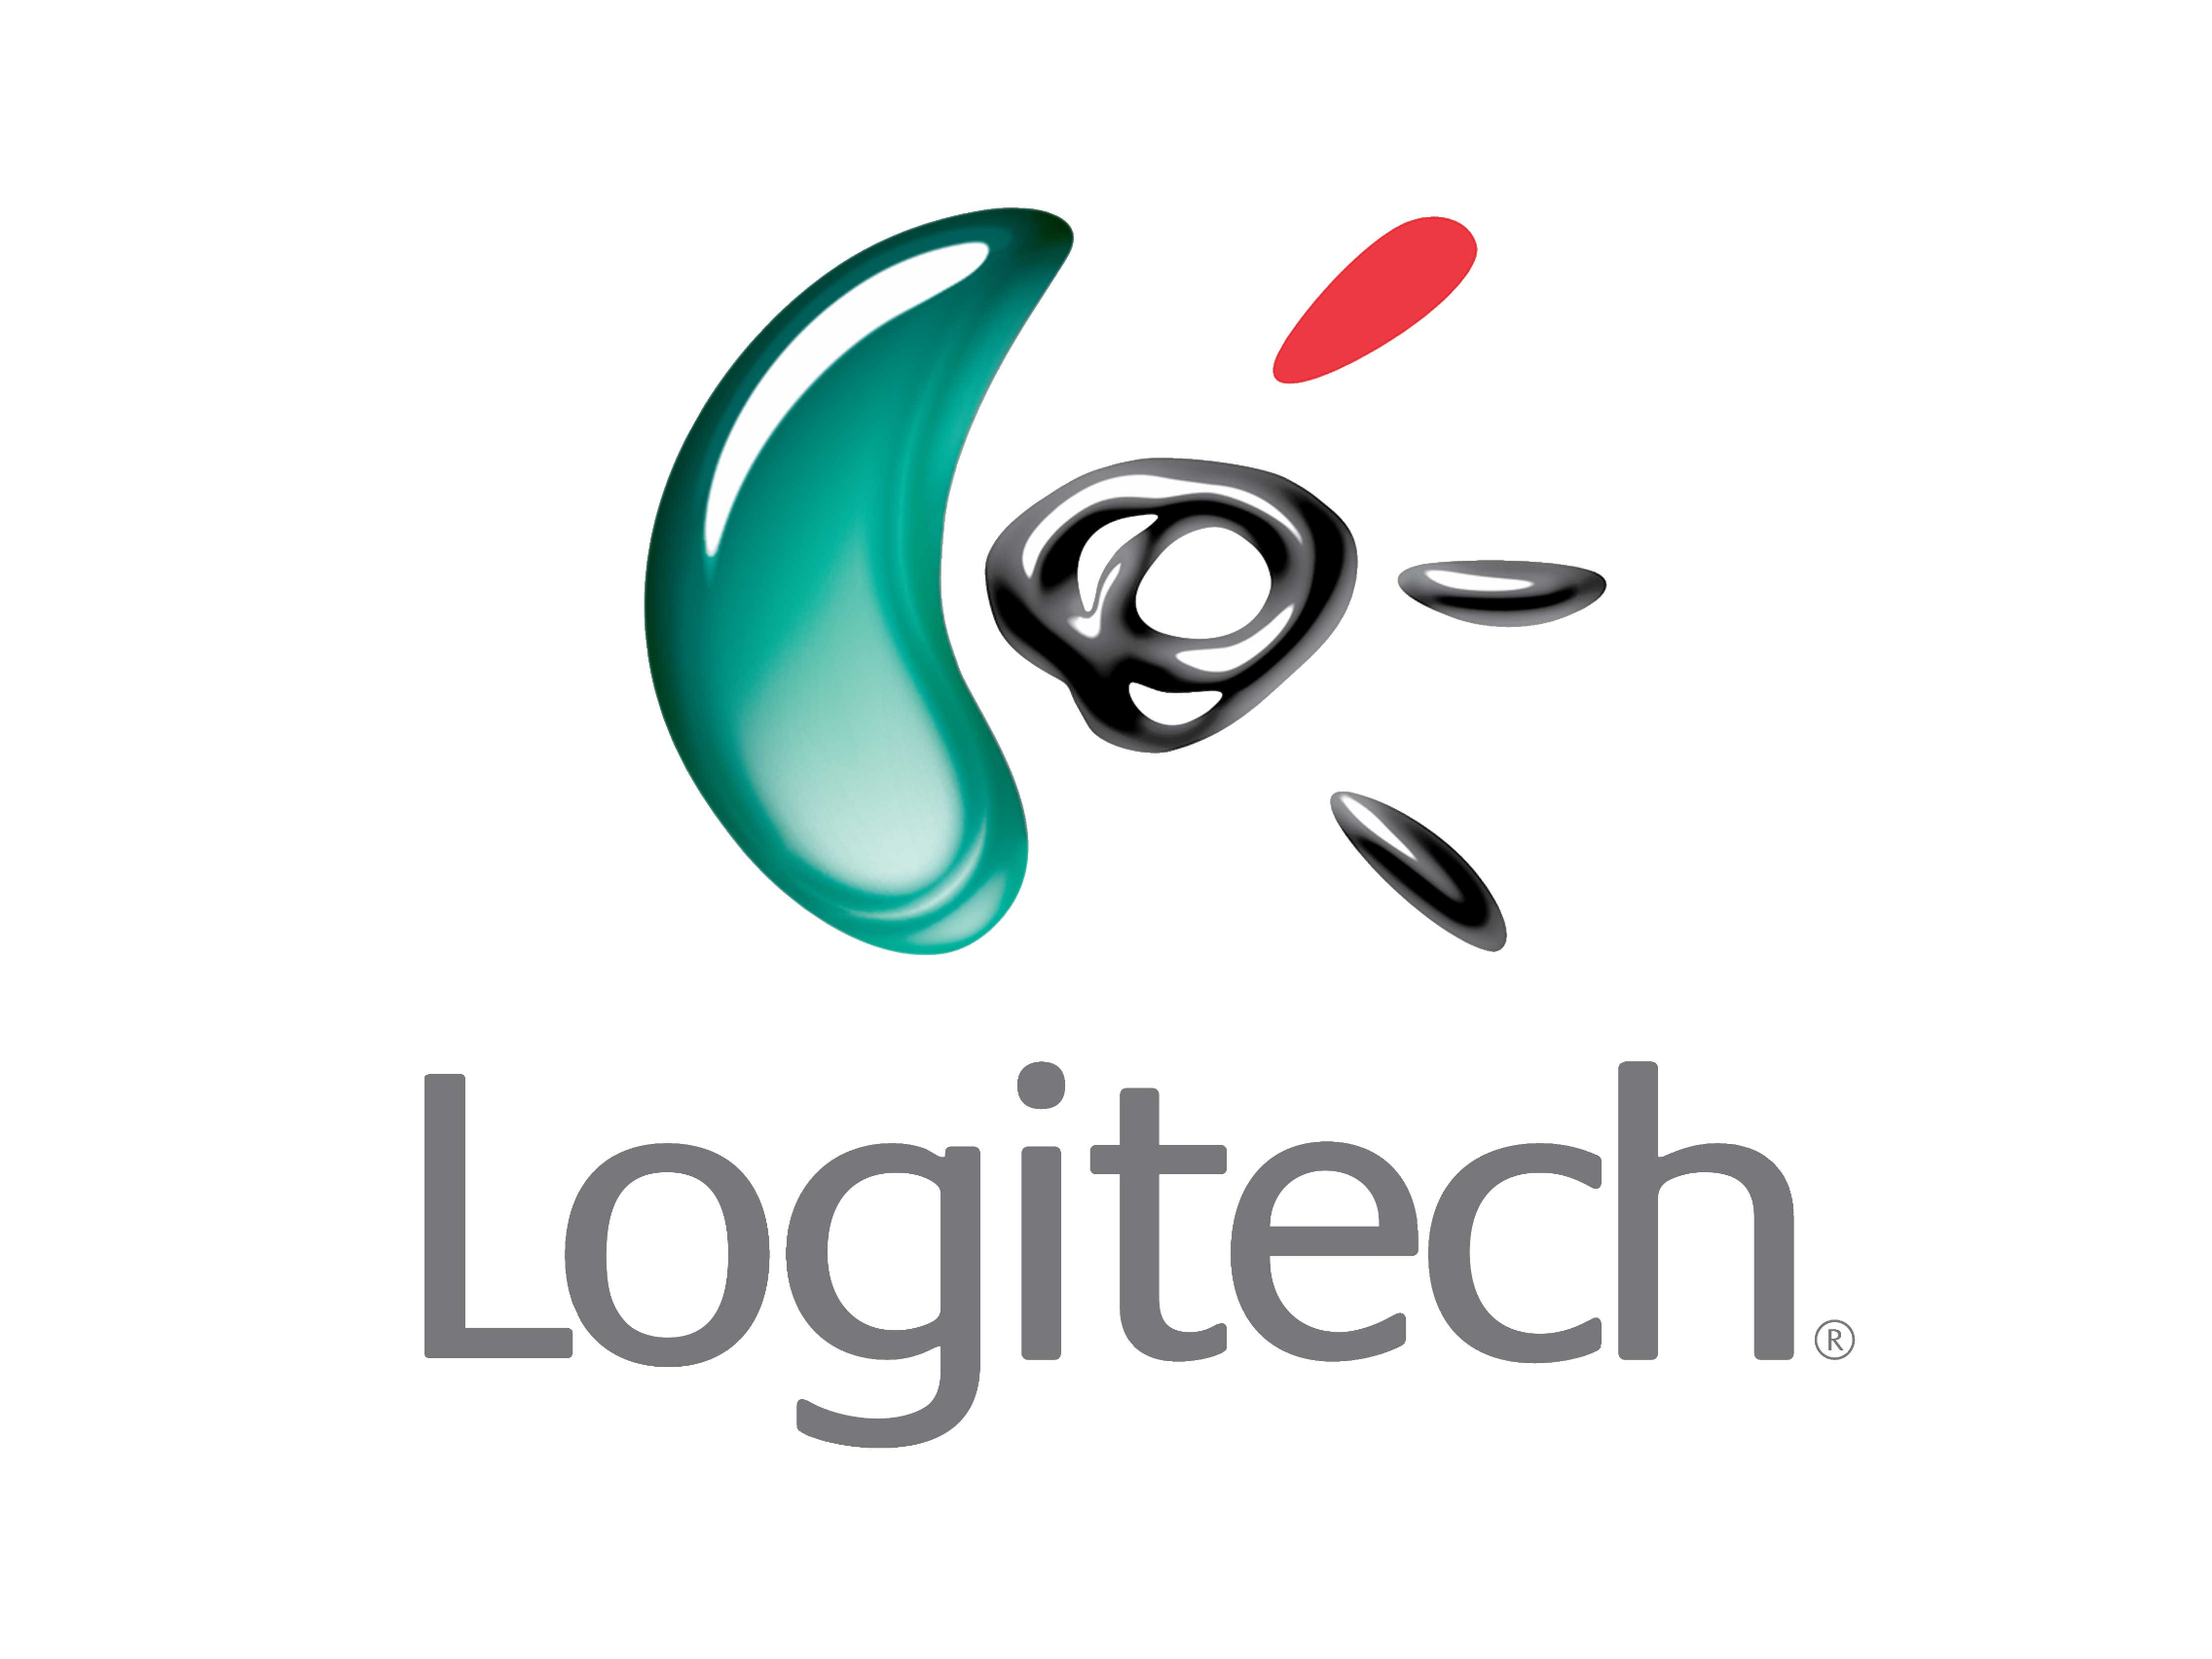 Logitech Logo Wallpaper